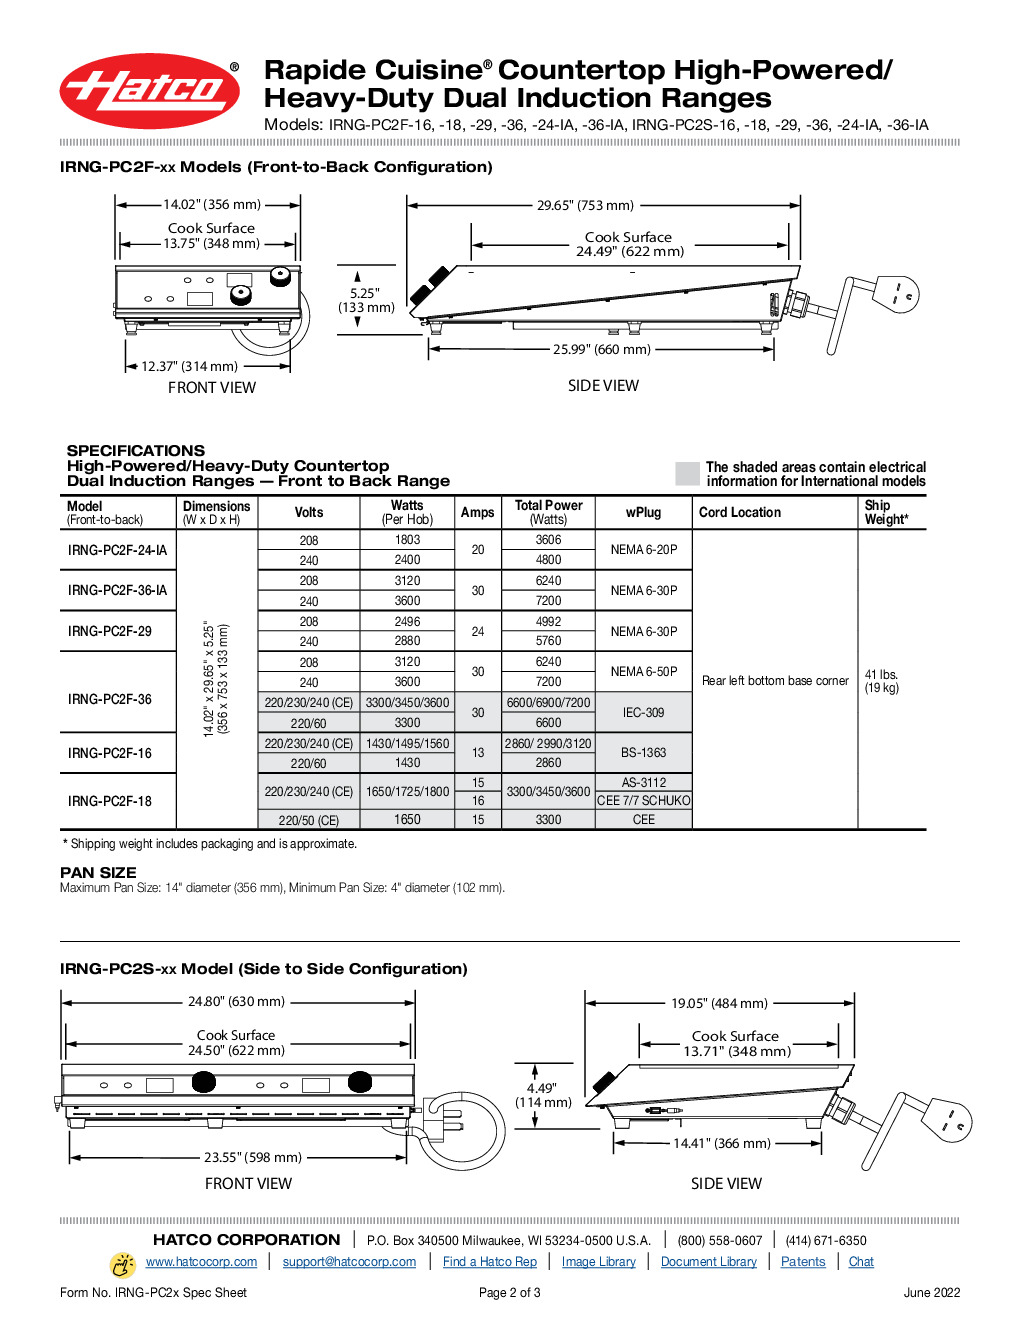 Hatco IRNG-PC2F-18-QS Countertop Induction Range